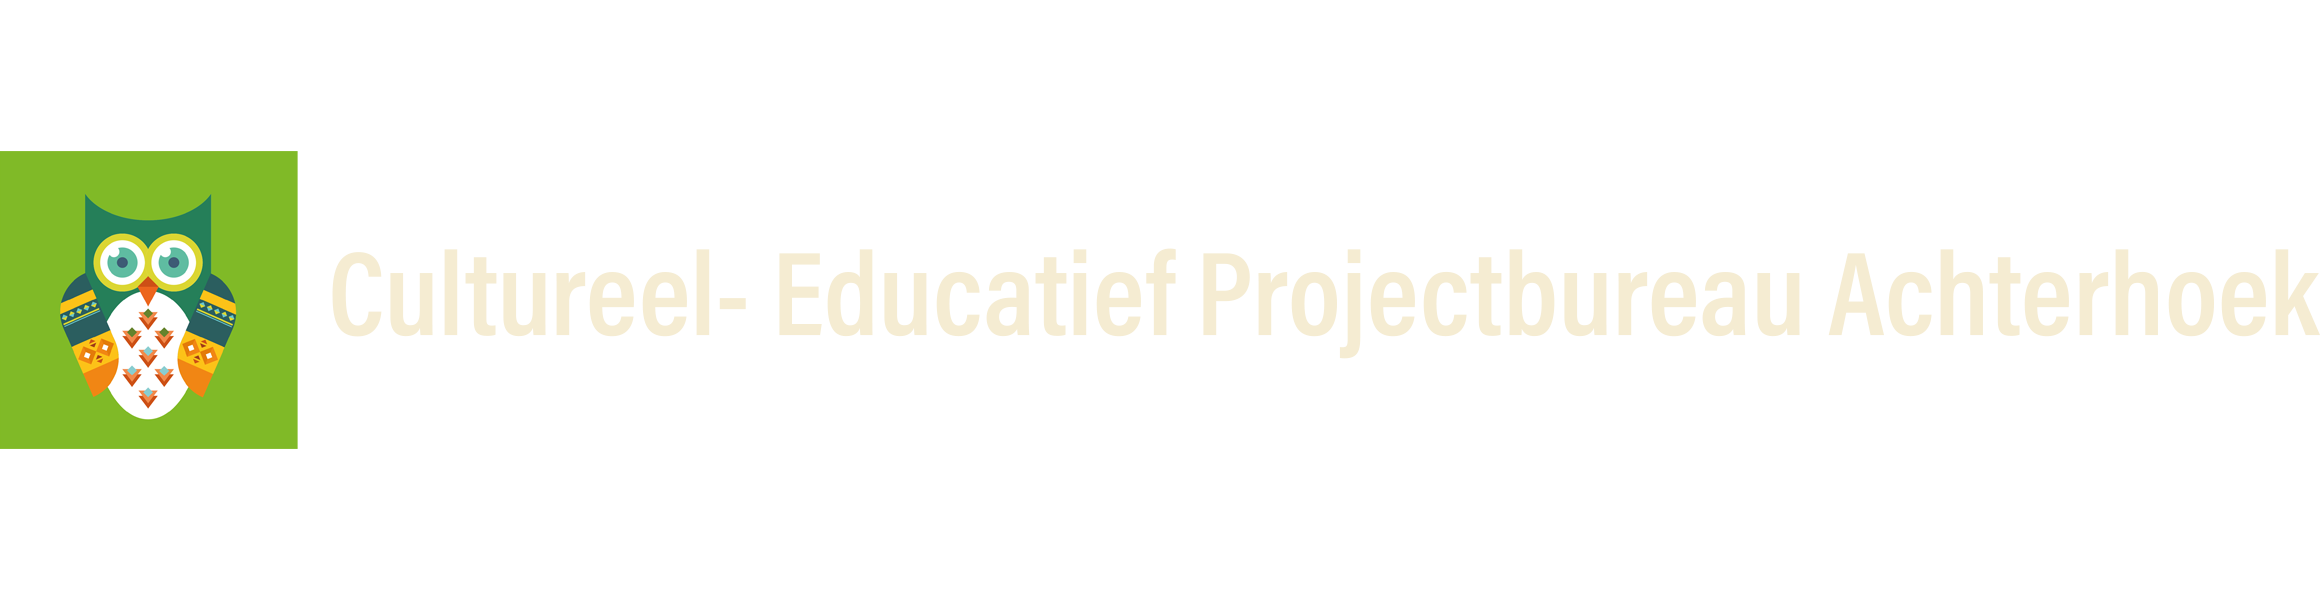 Cultureel- Educatief Projectbureau Achterhoek